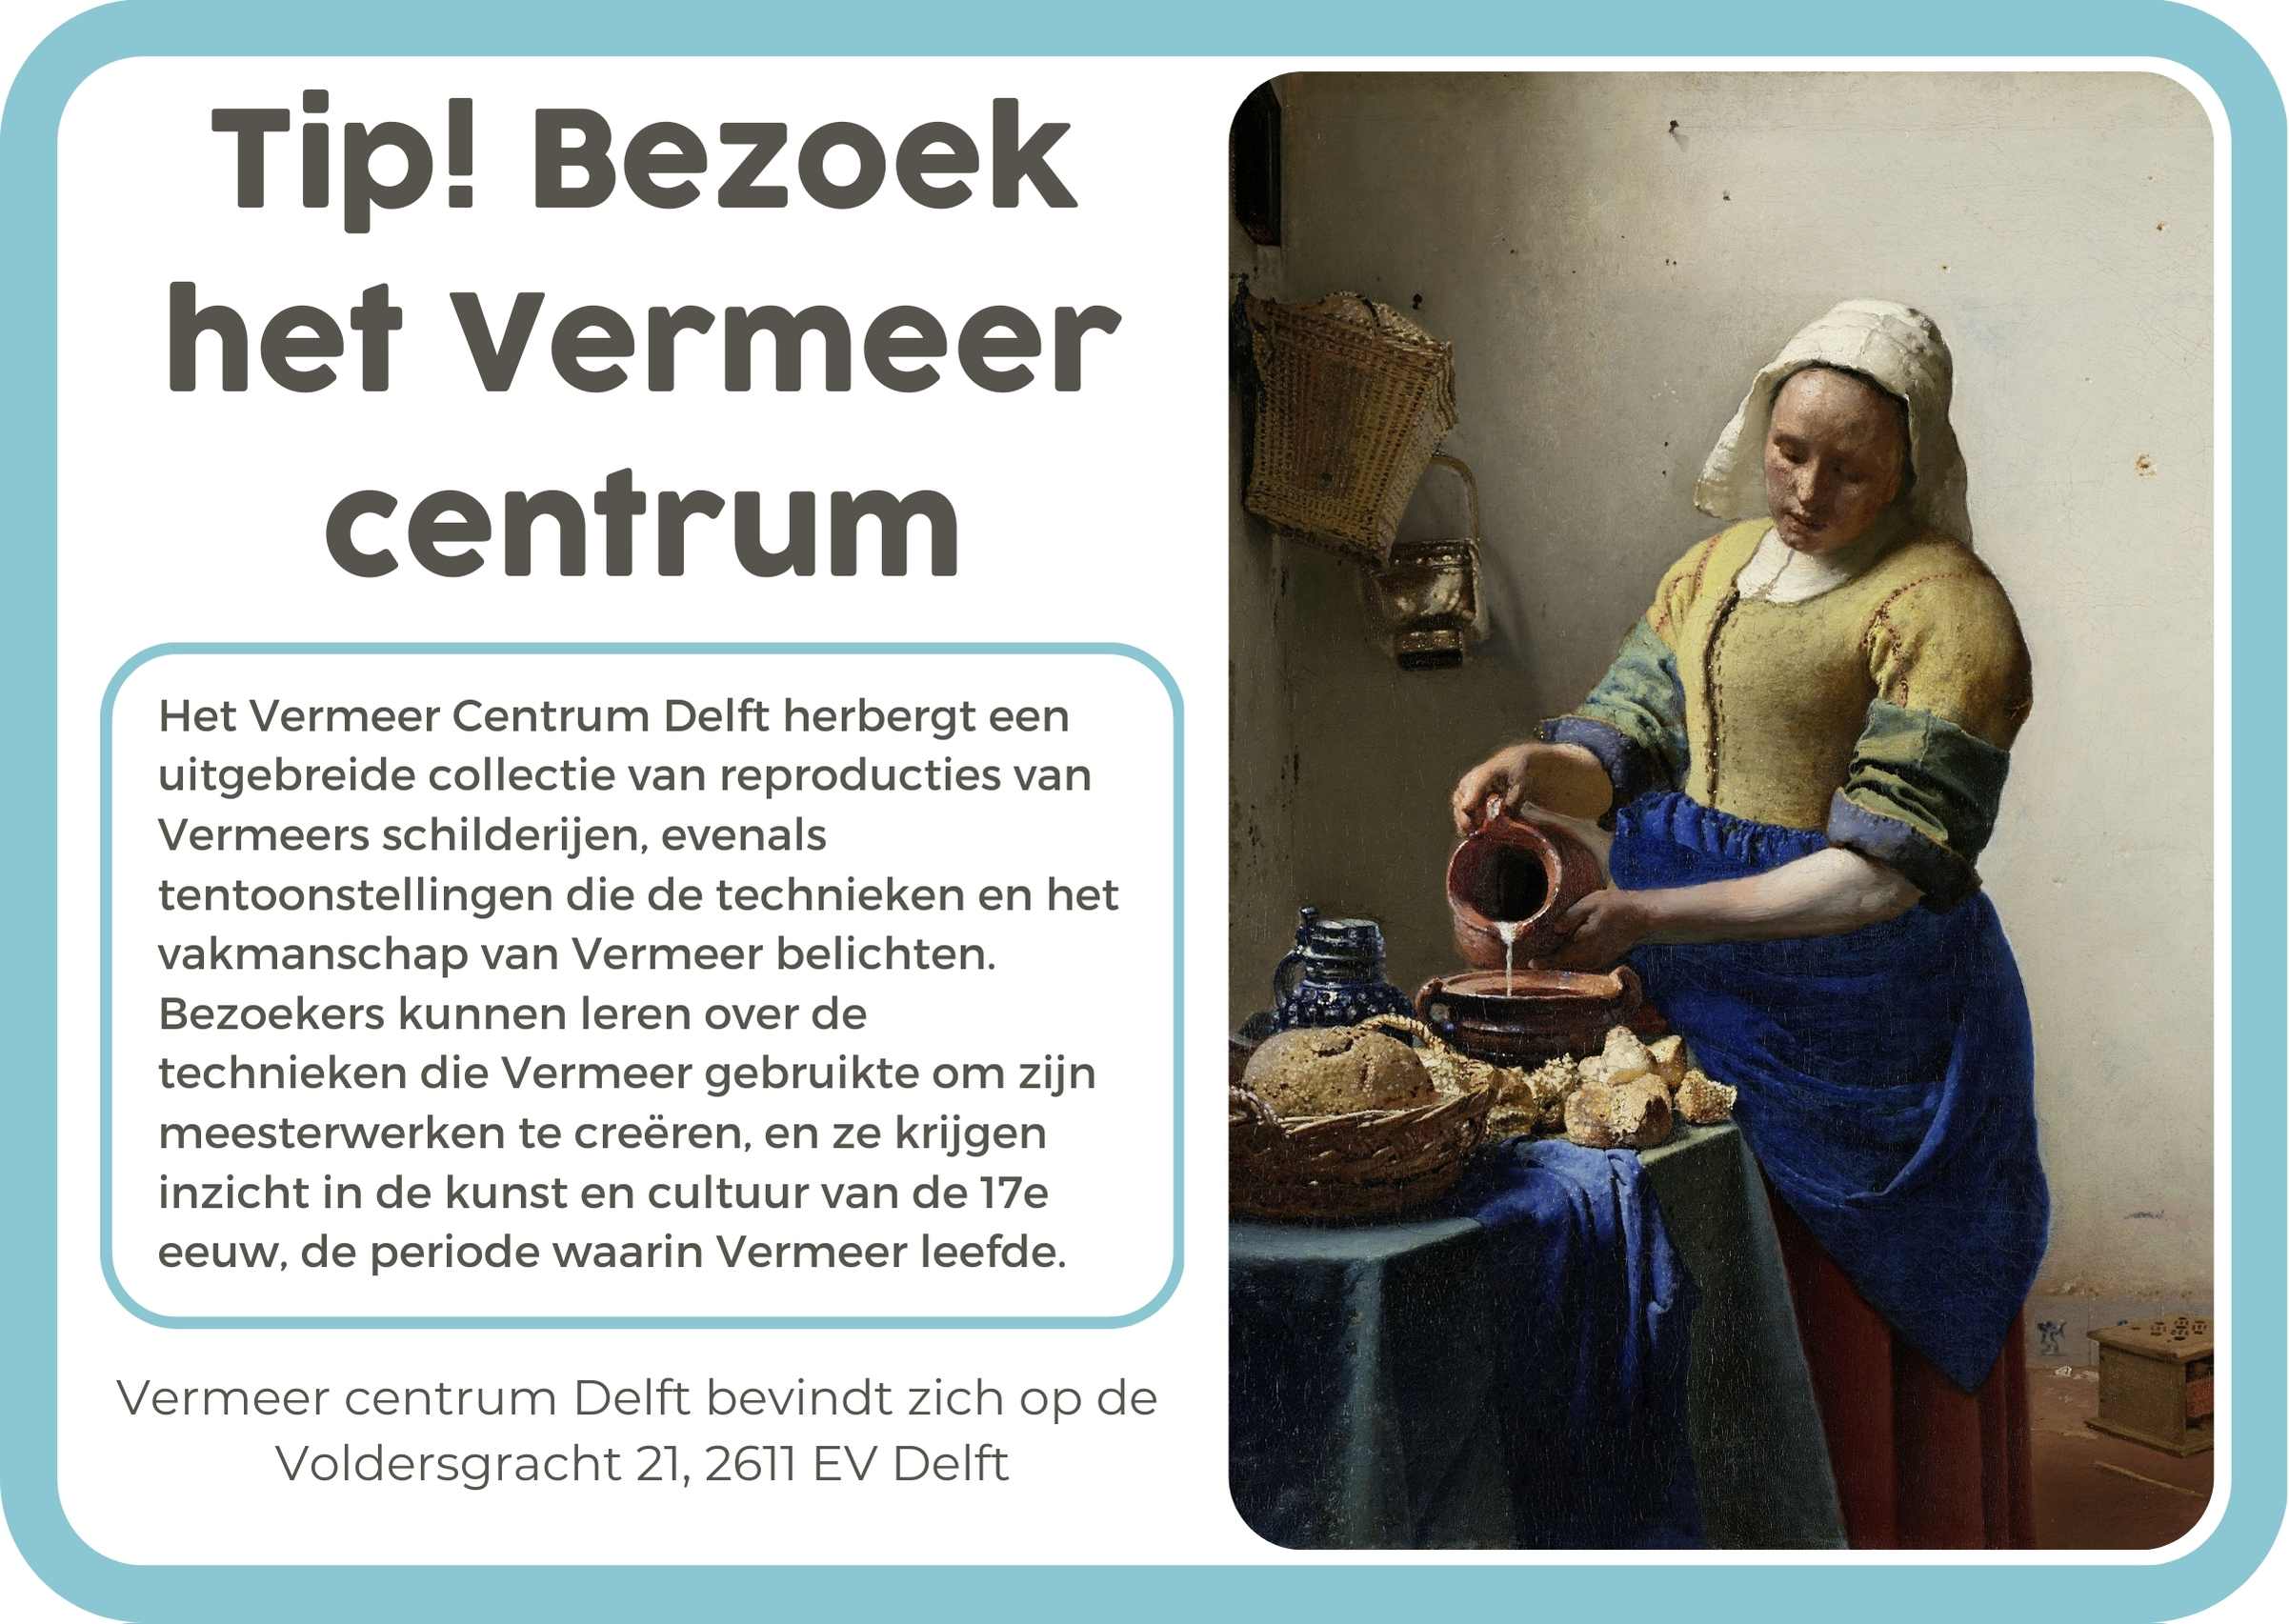 4. NL Vermeer centrum